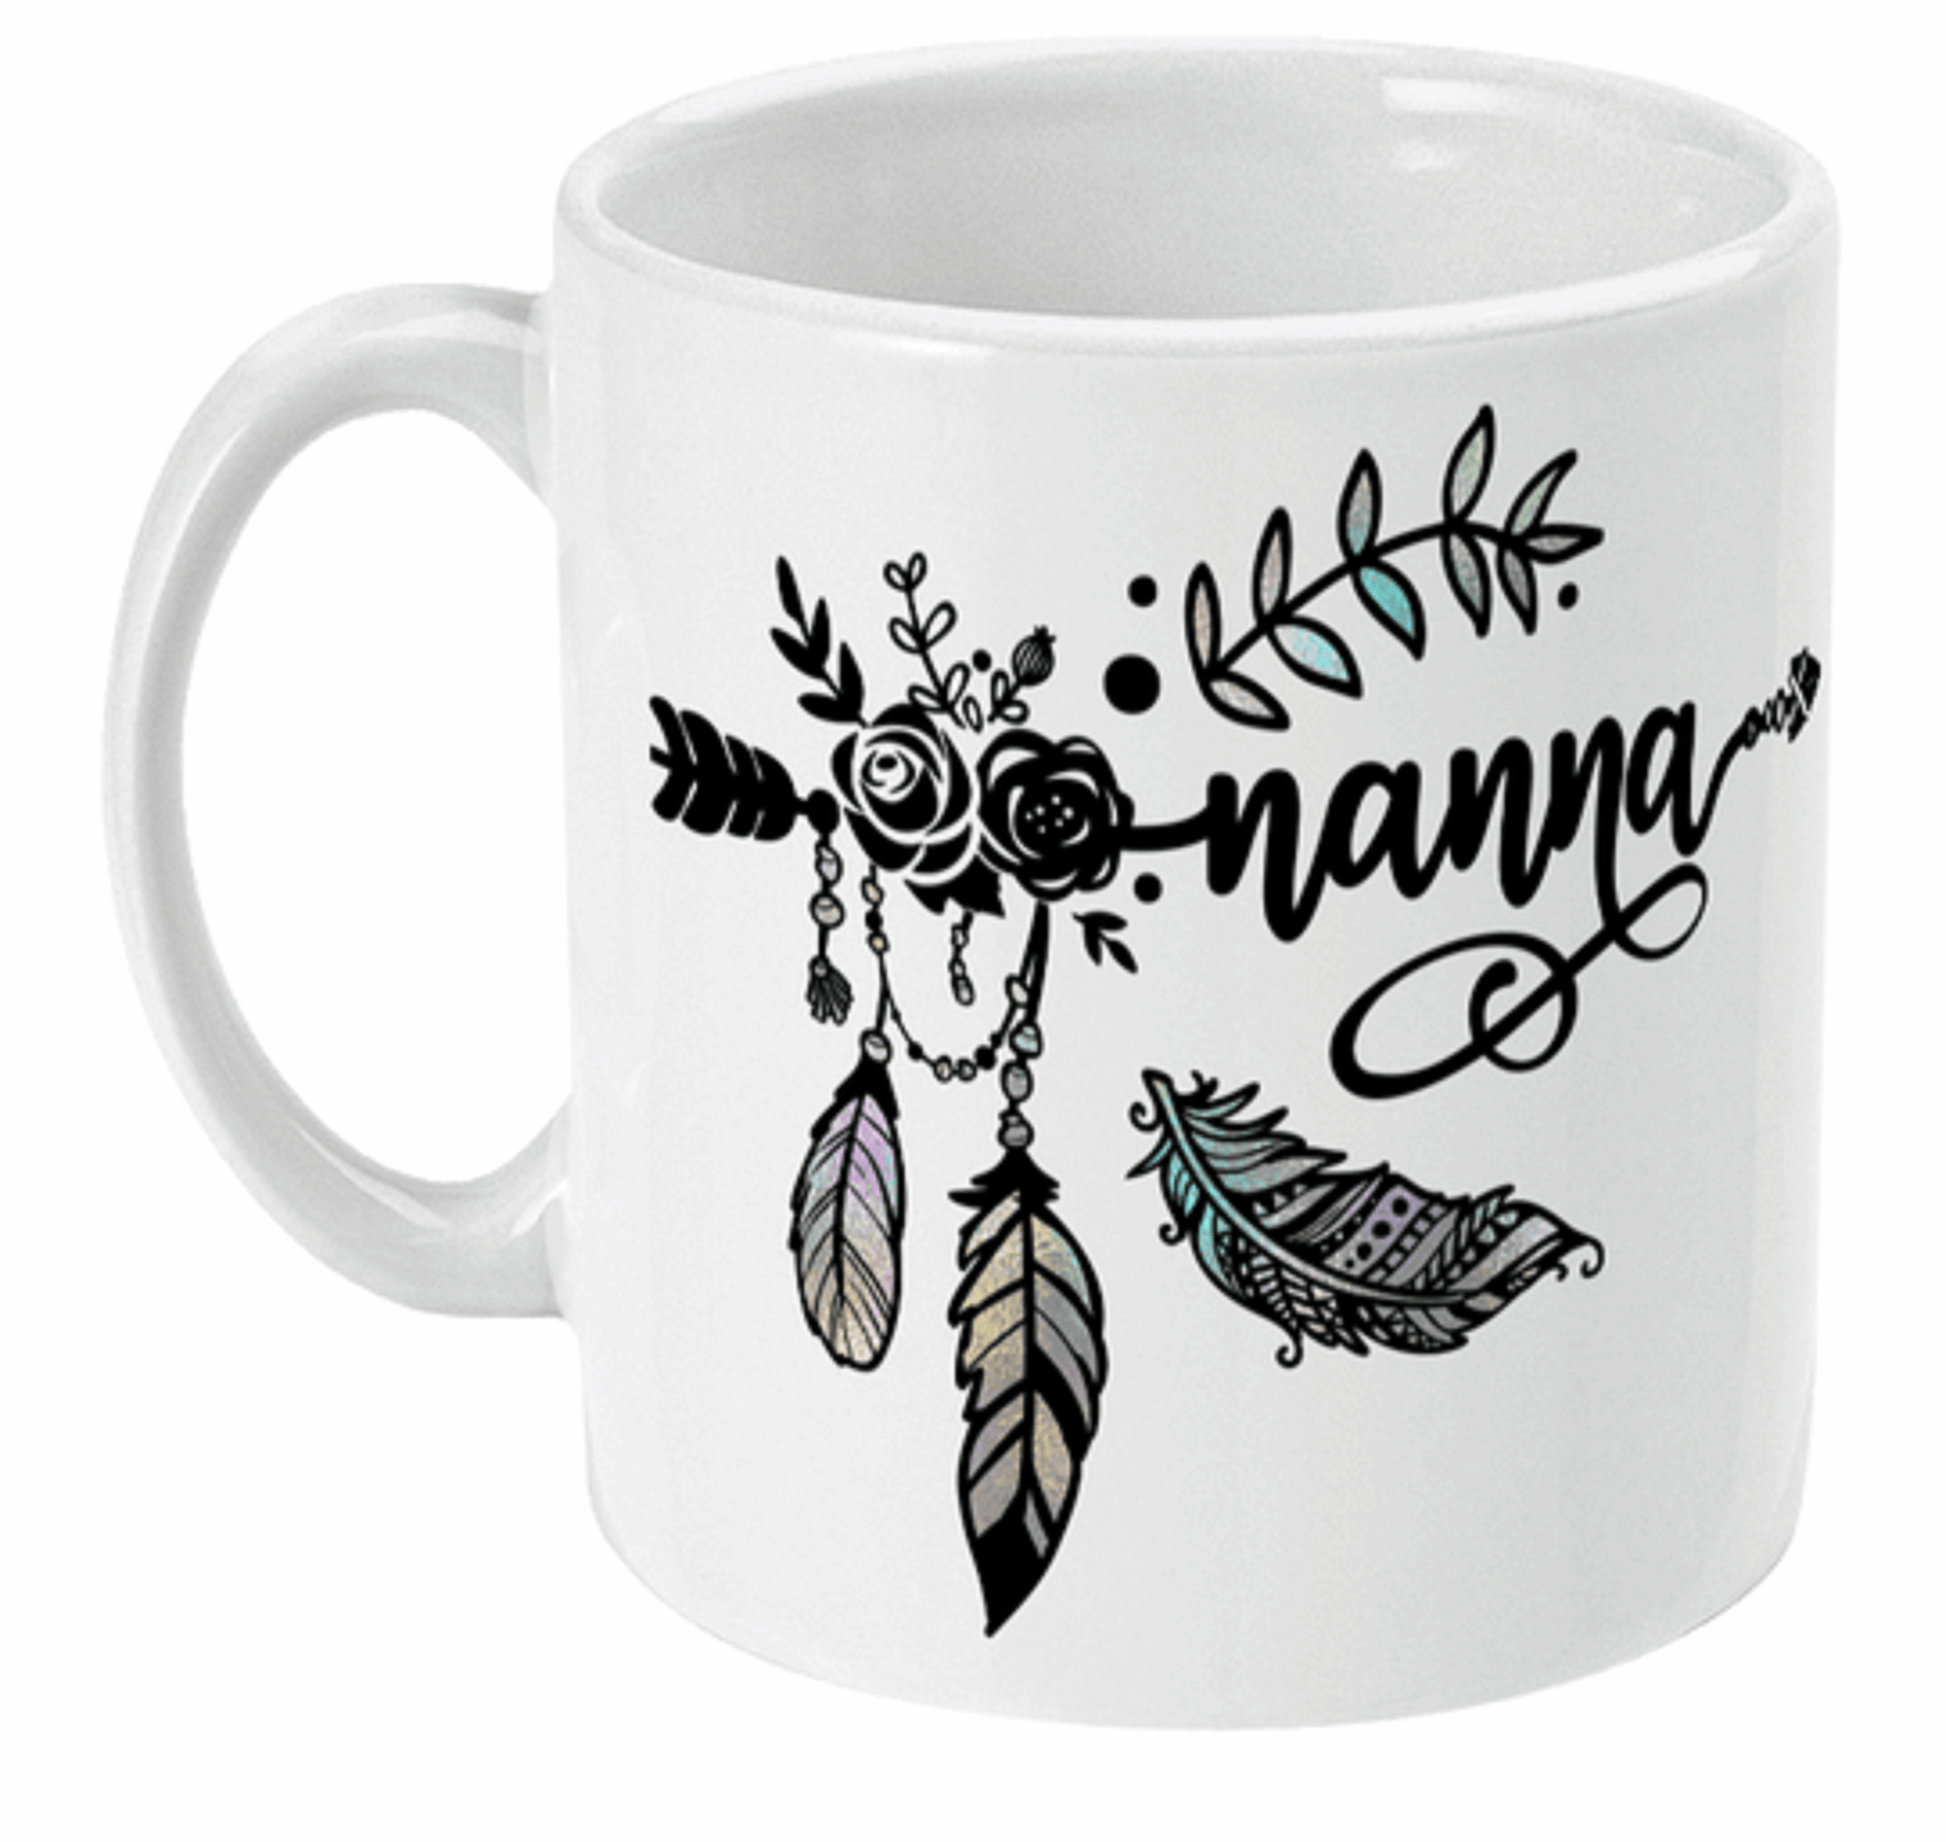  Nanna or Grandma Feathers Coffee Mug by Free Spirit Accessories sold by Free Spirit Accessories